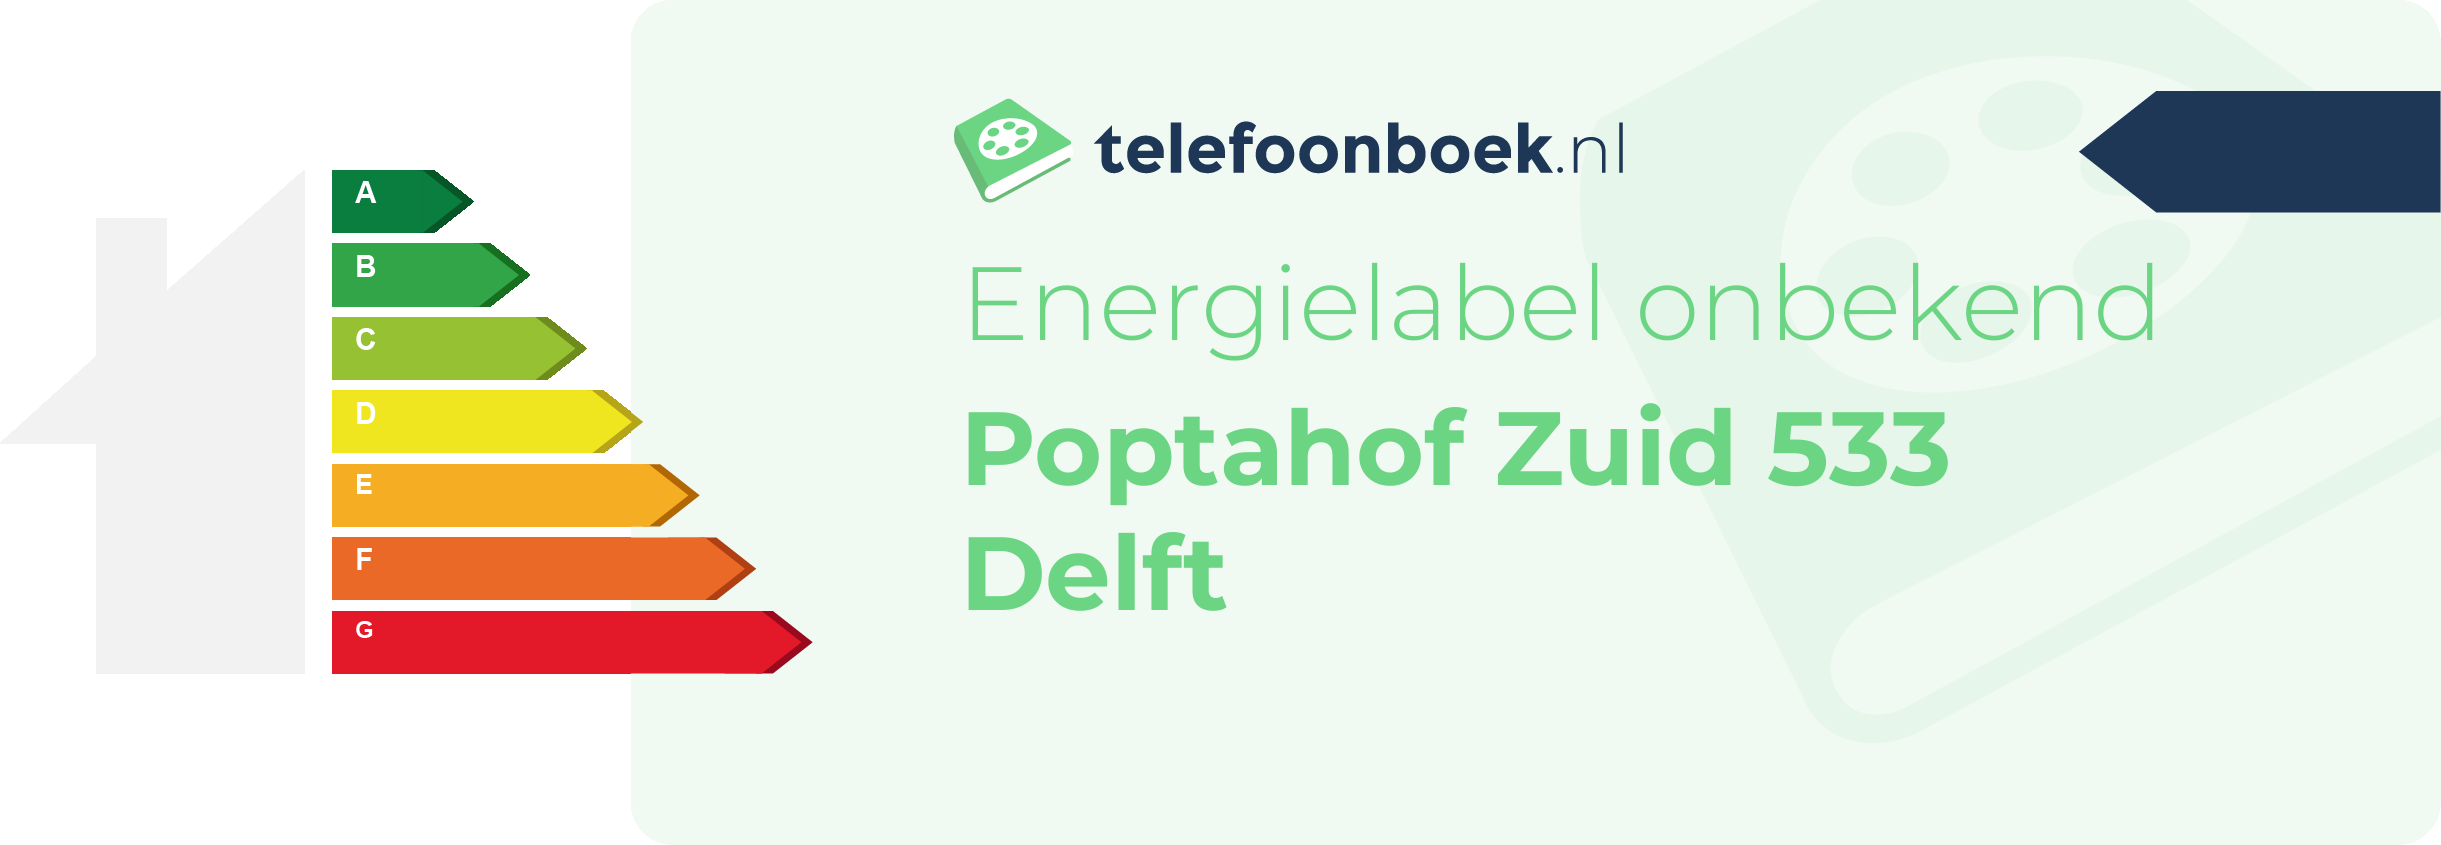 Energielabel Poptahof Zuid 533 Delft